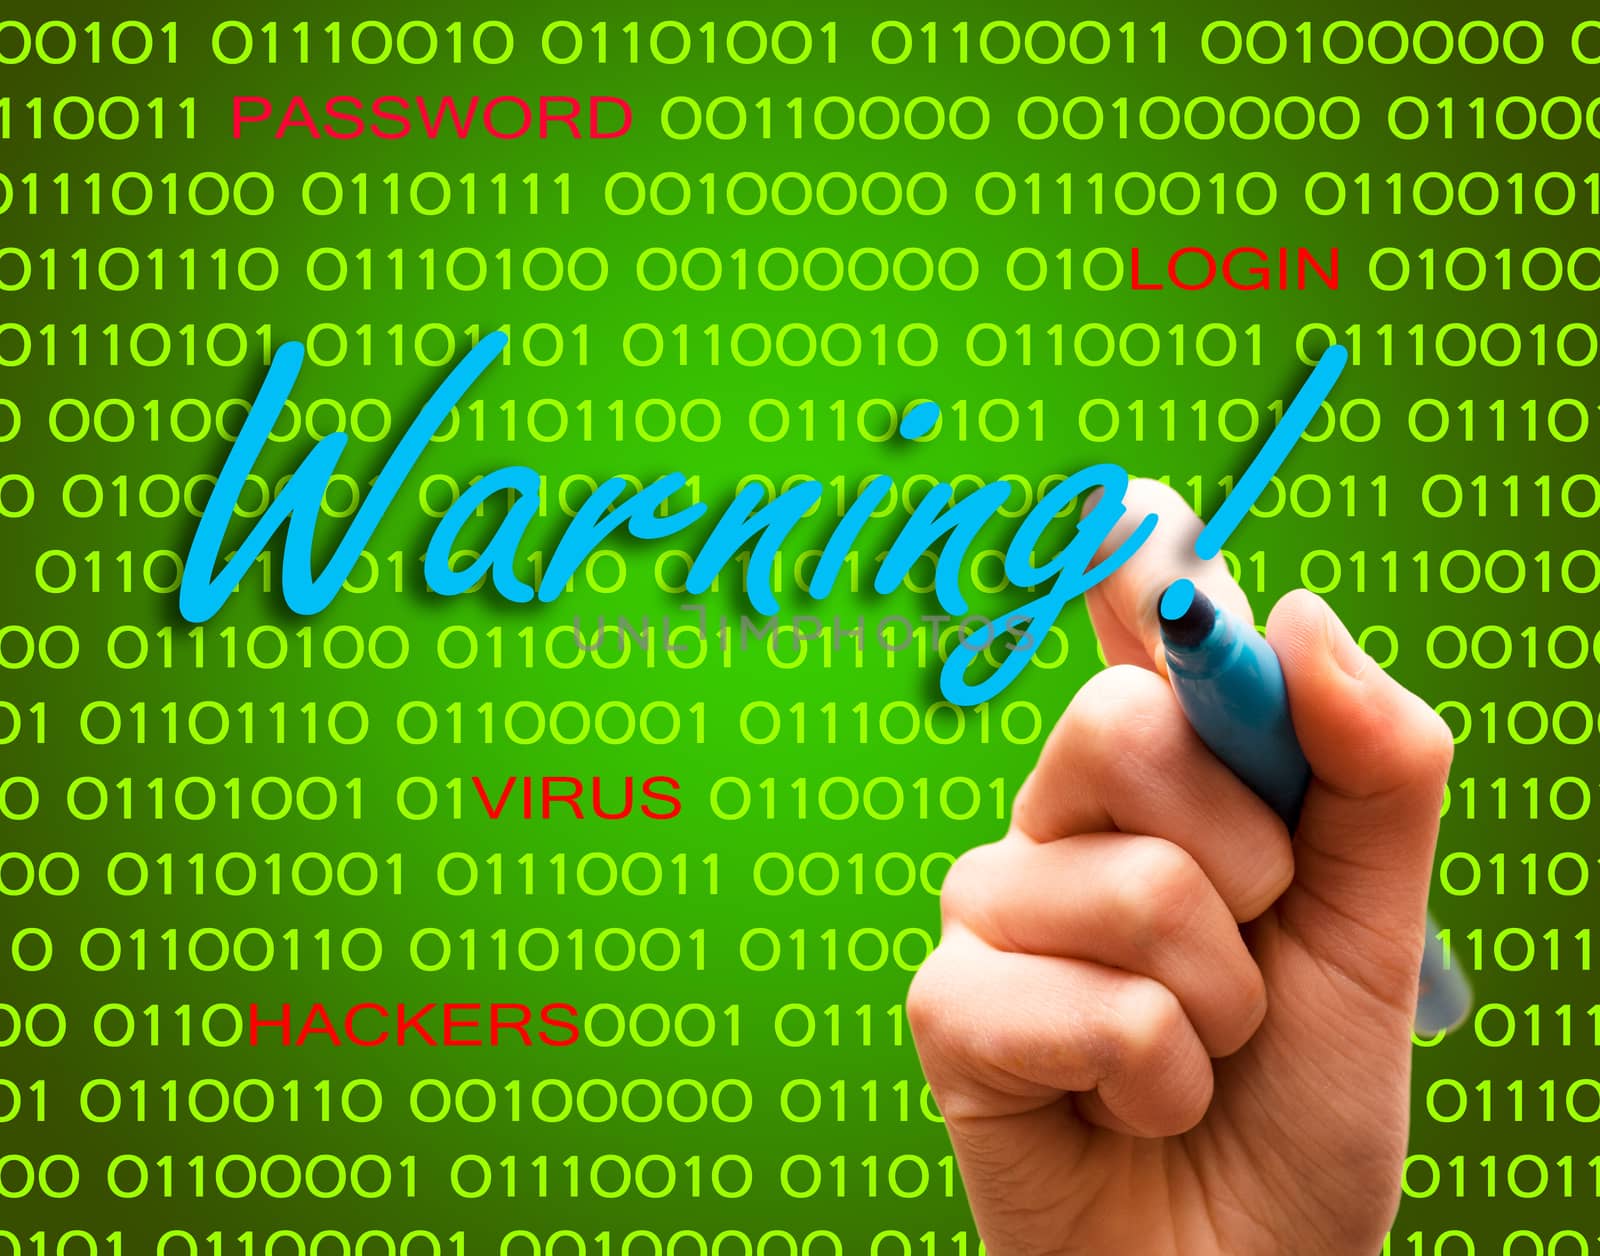 Warning password login virus hackers hand binary text by Havana